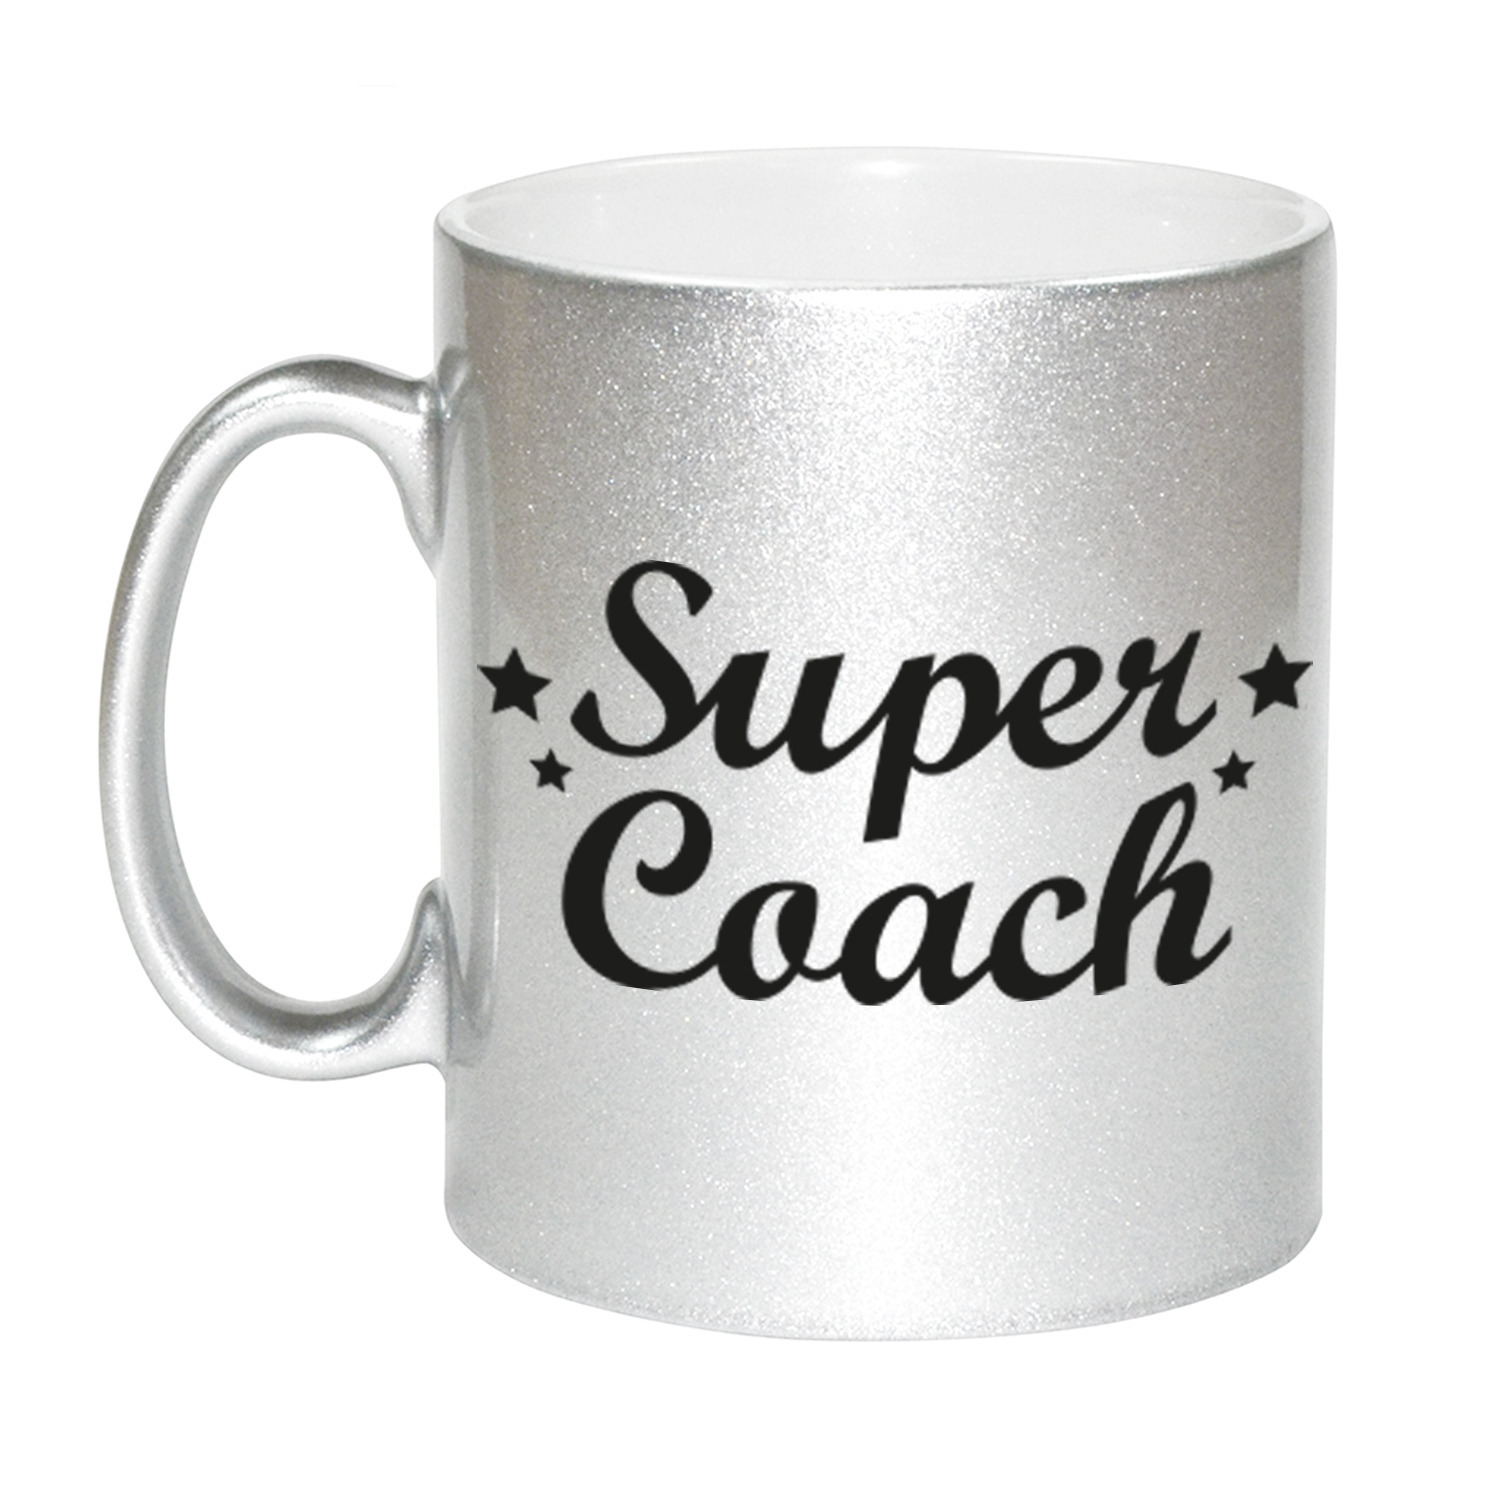 Super coach zilveren mok / beker 330 ml